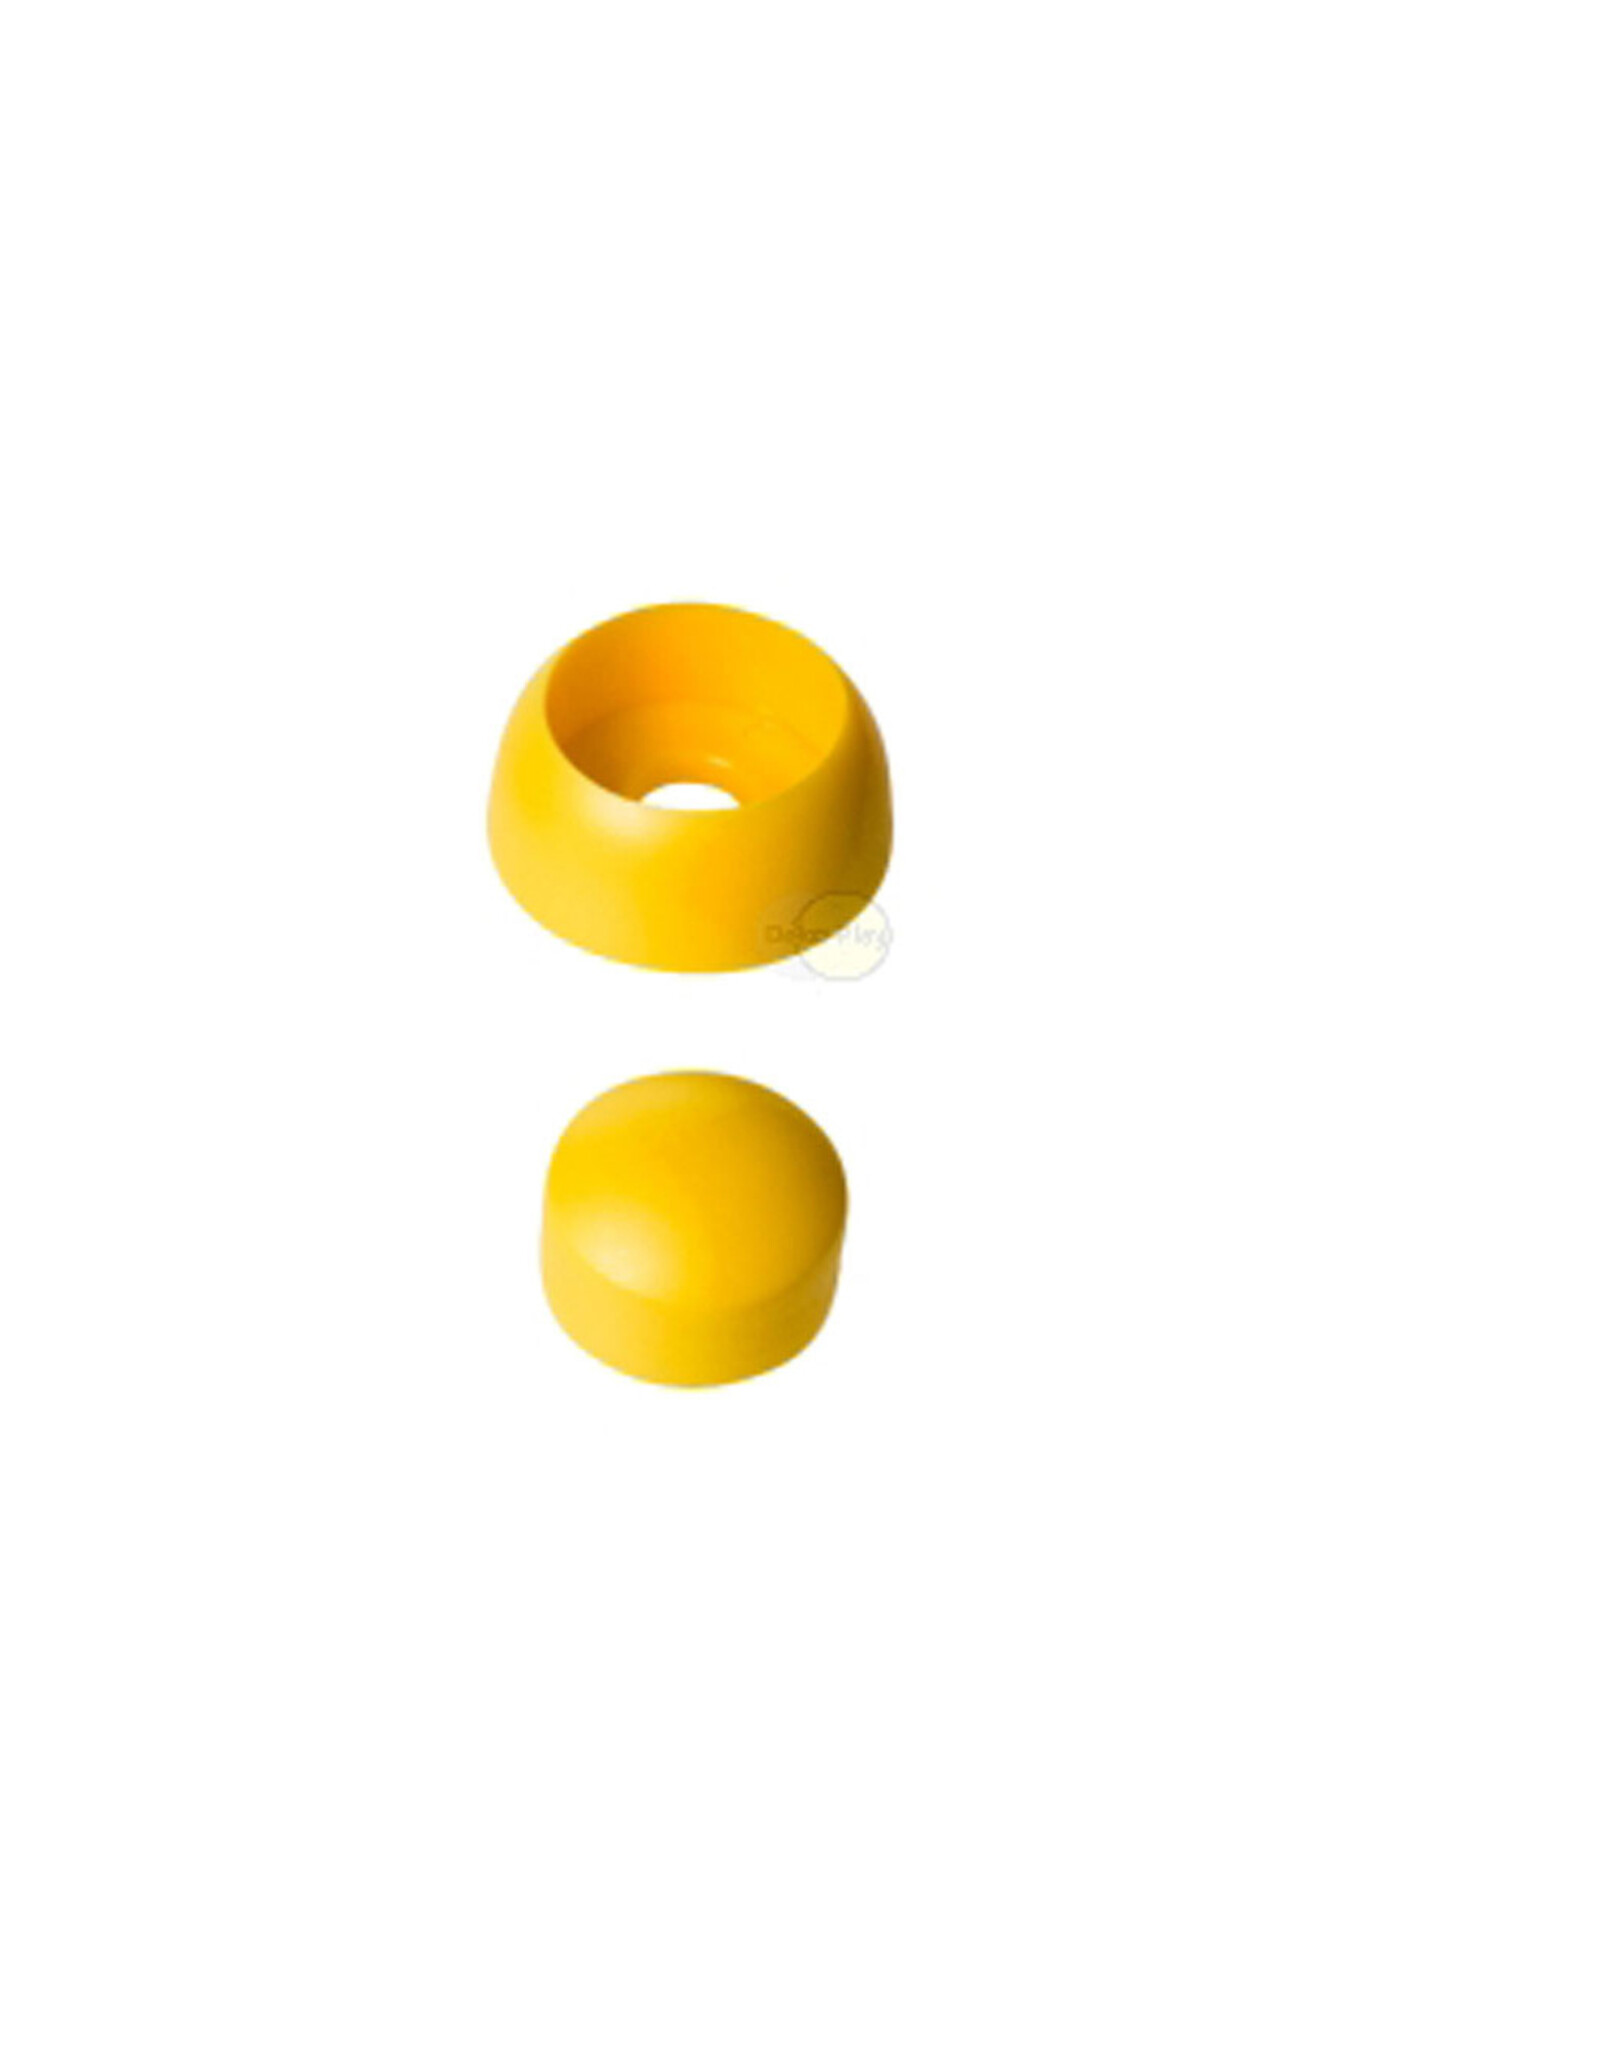 Déko-Play Déko-Play - cover cap M10 two-piece - per set - yellow